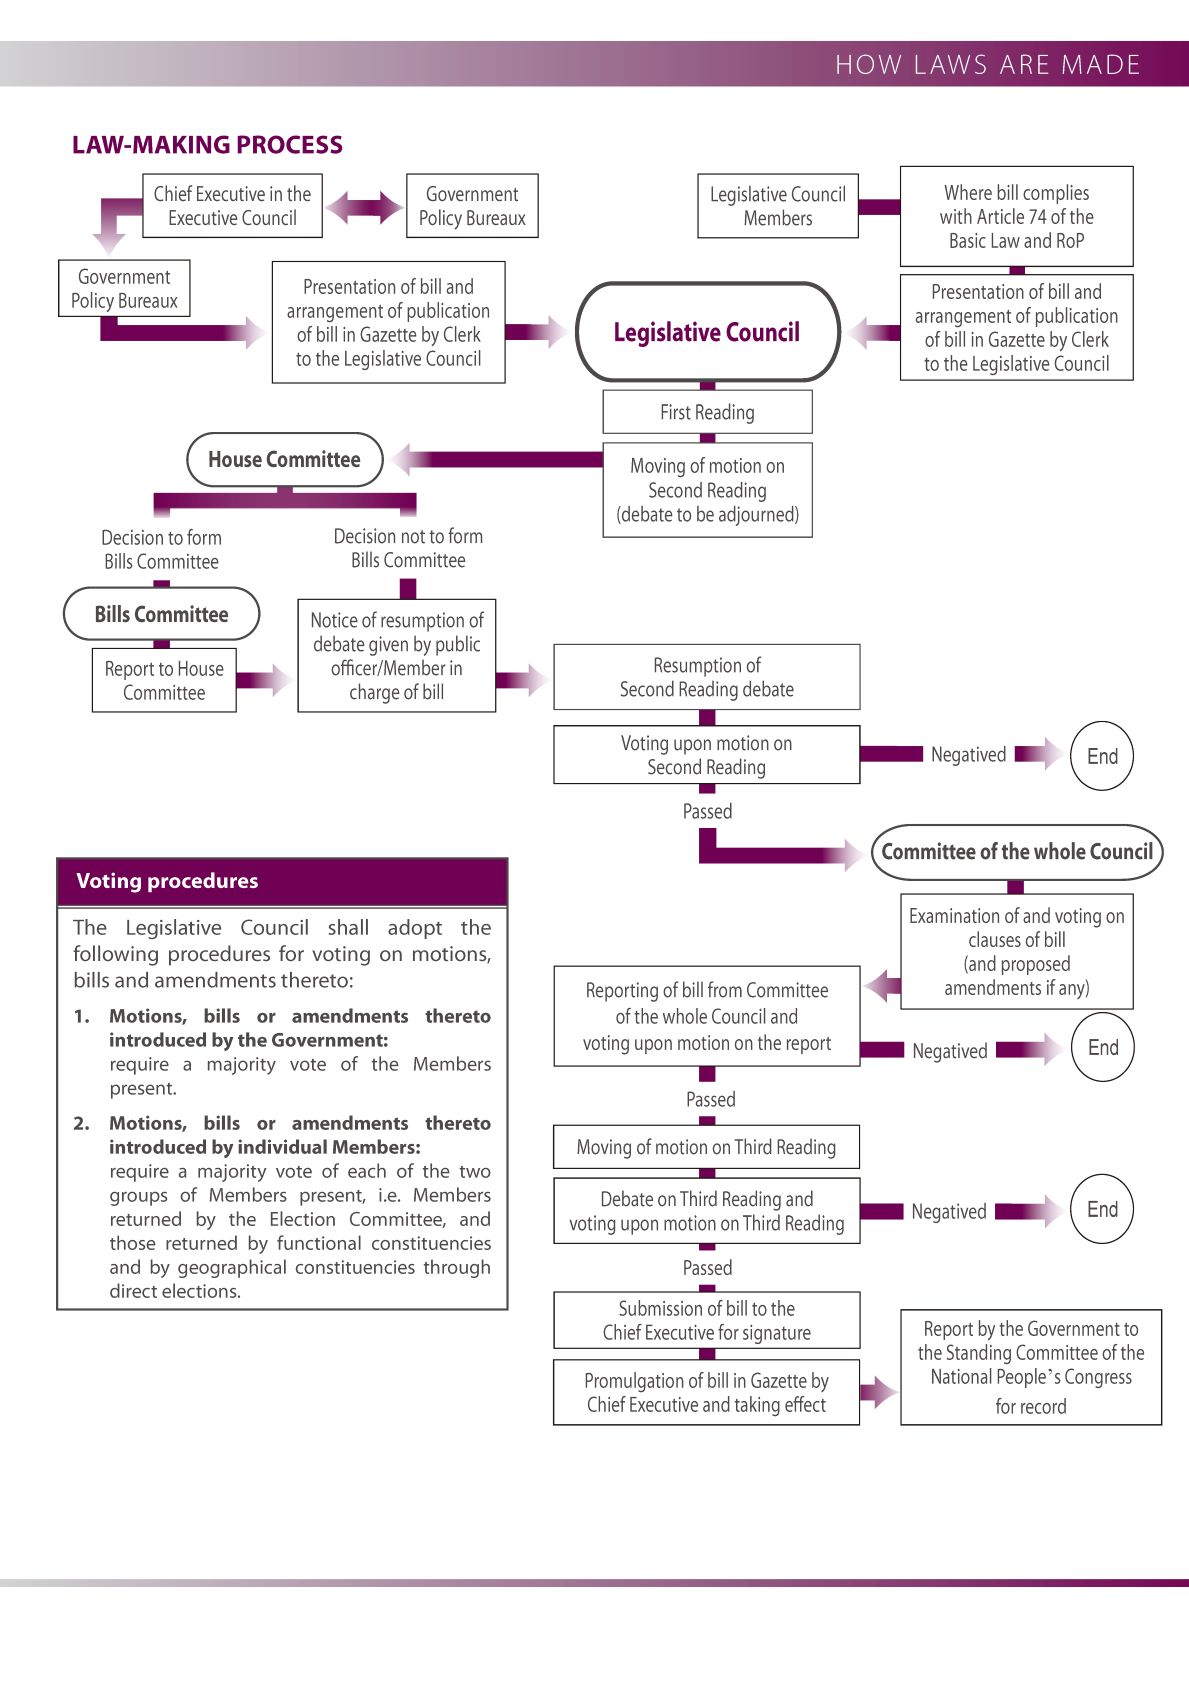 Law-making process diagram